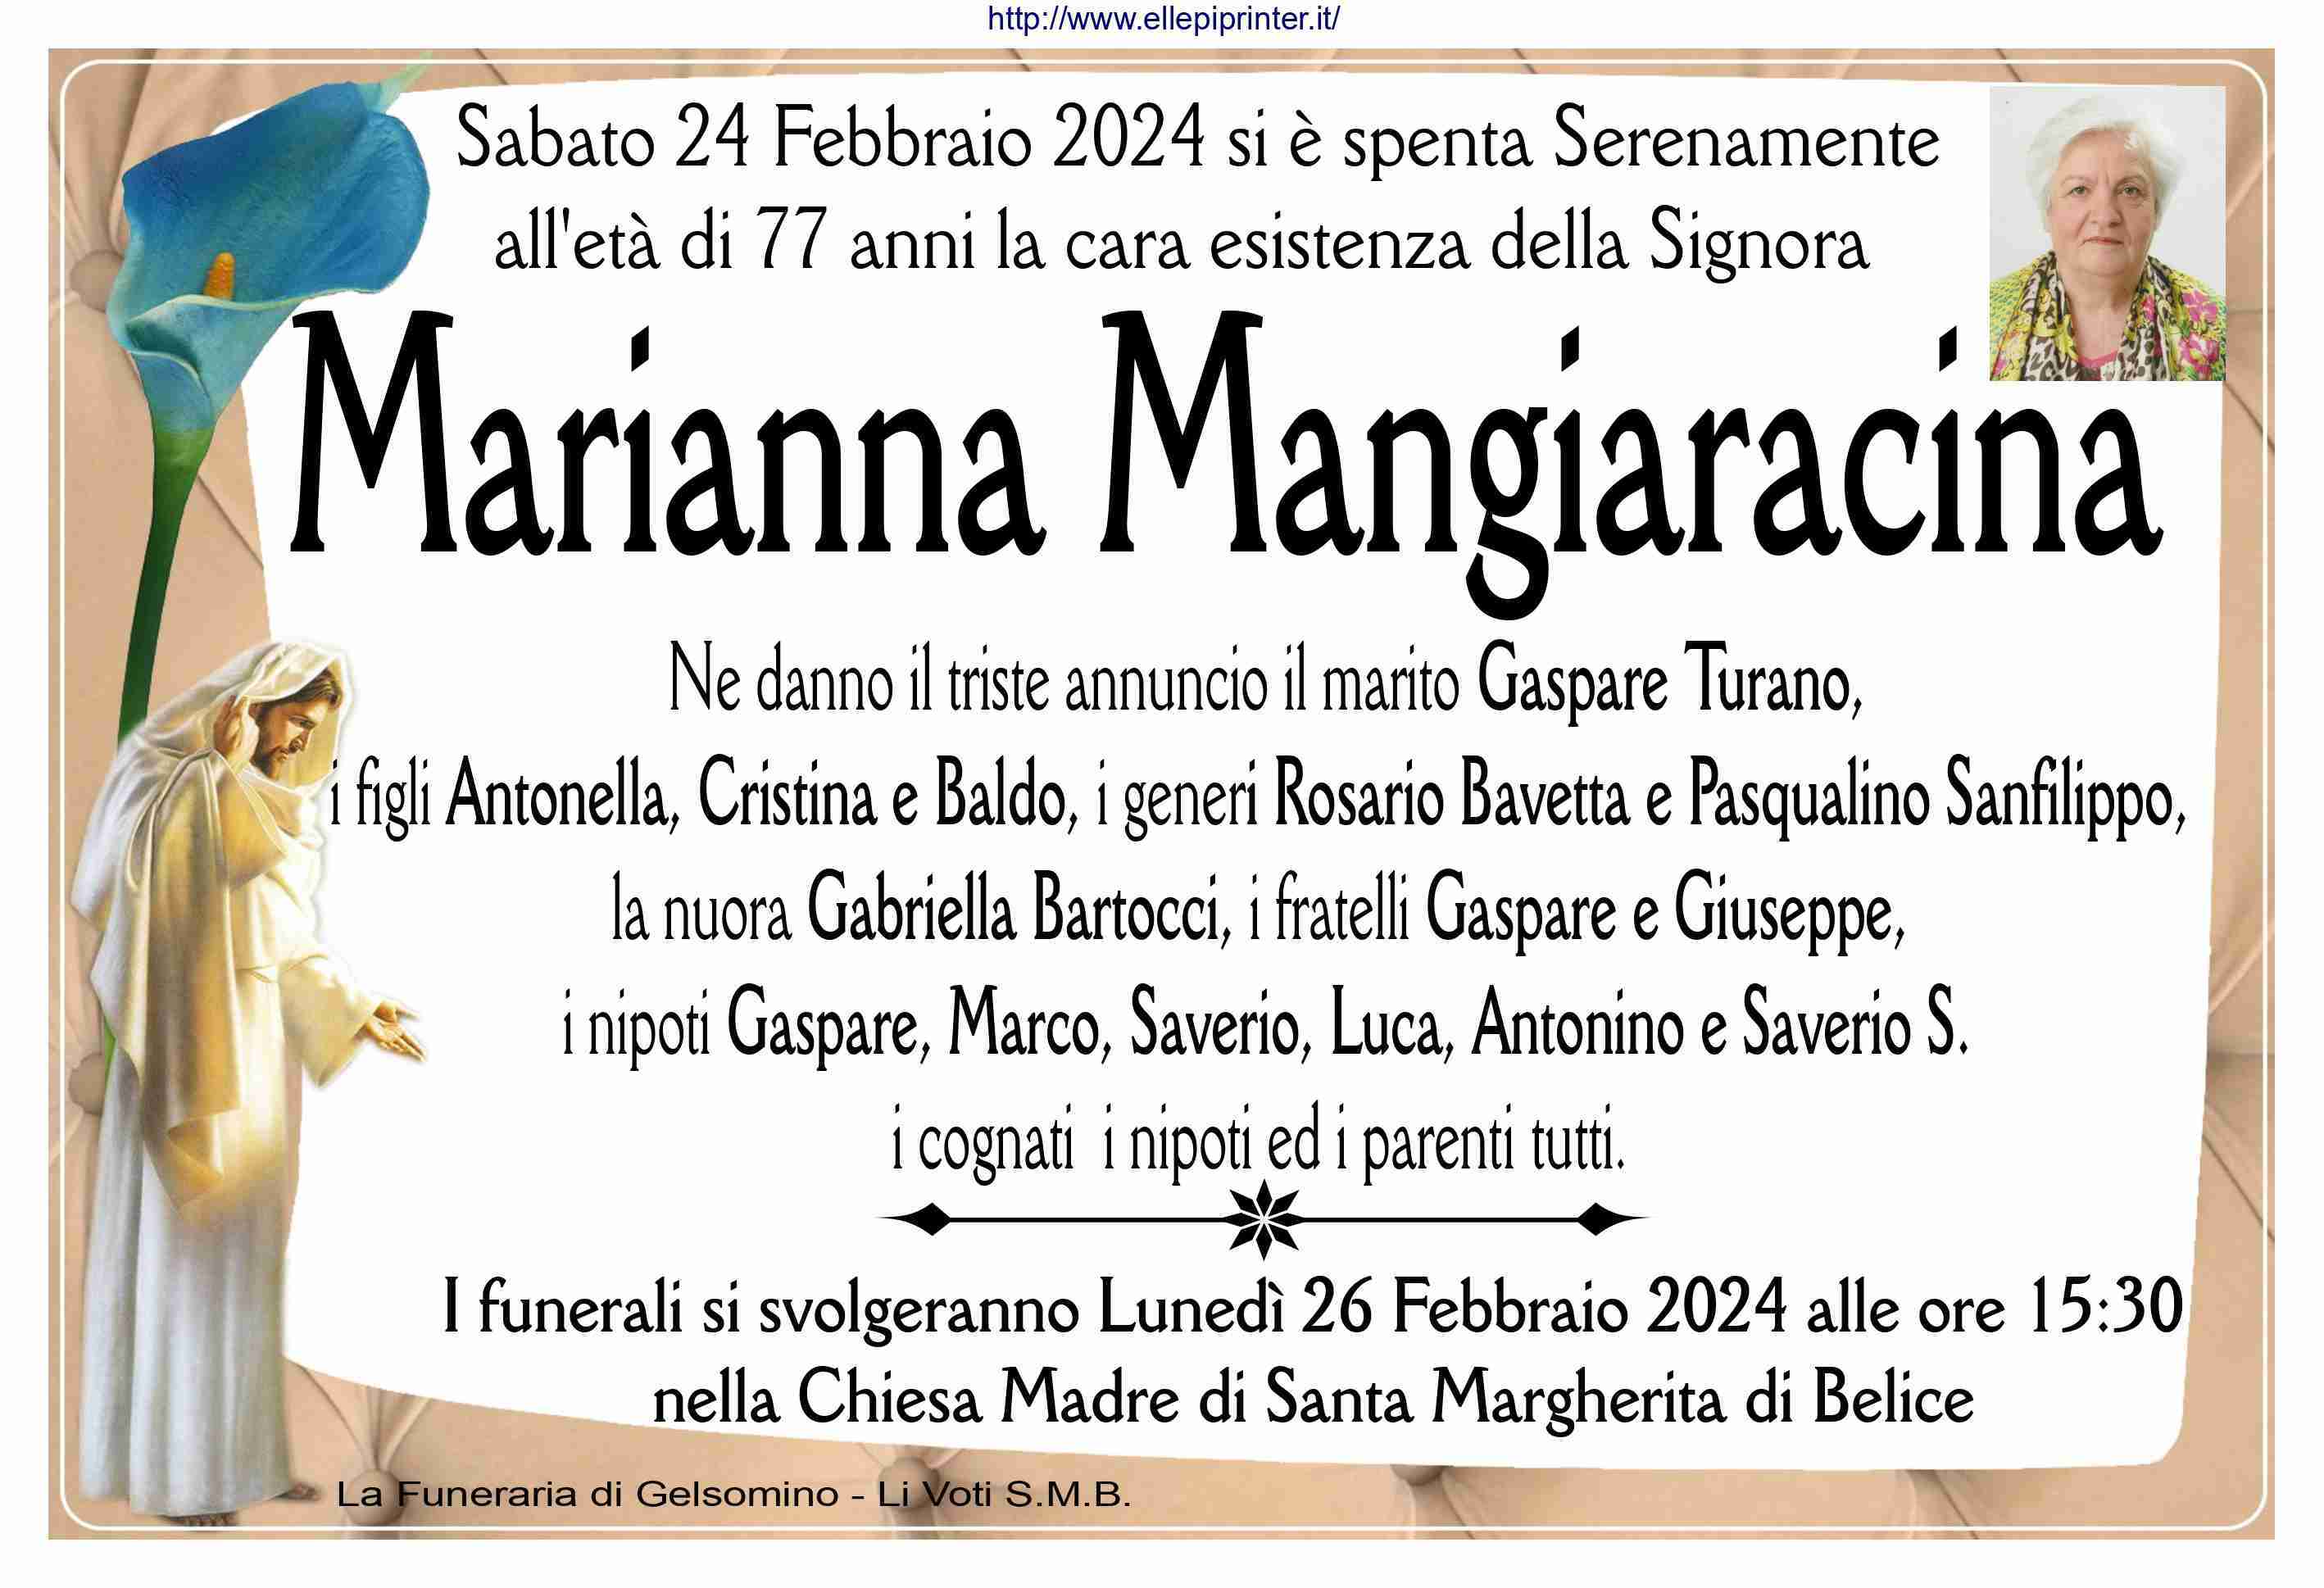 Marianna Mangiaracina